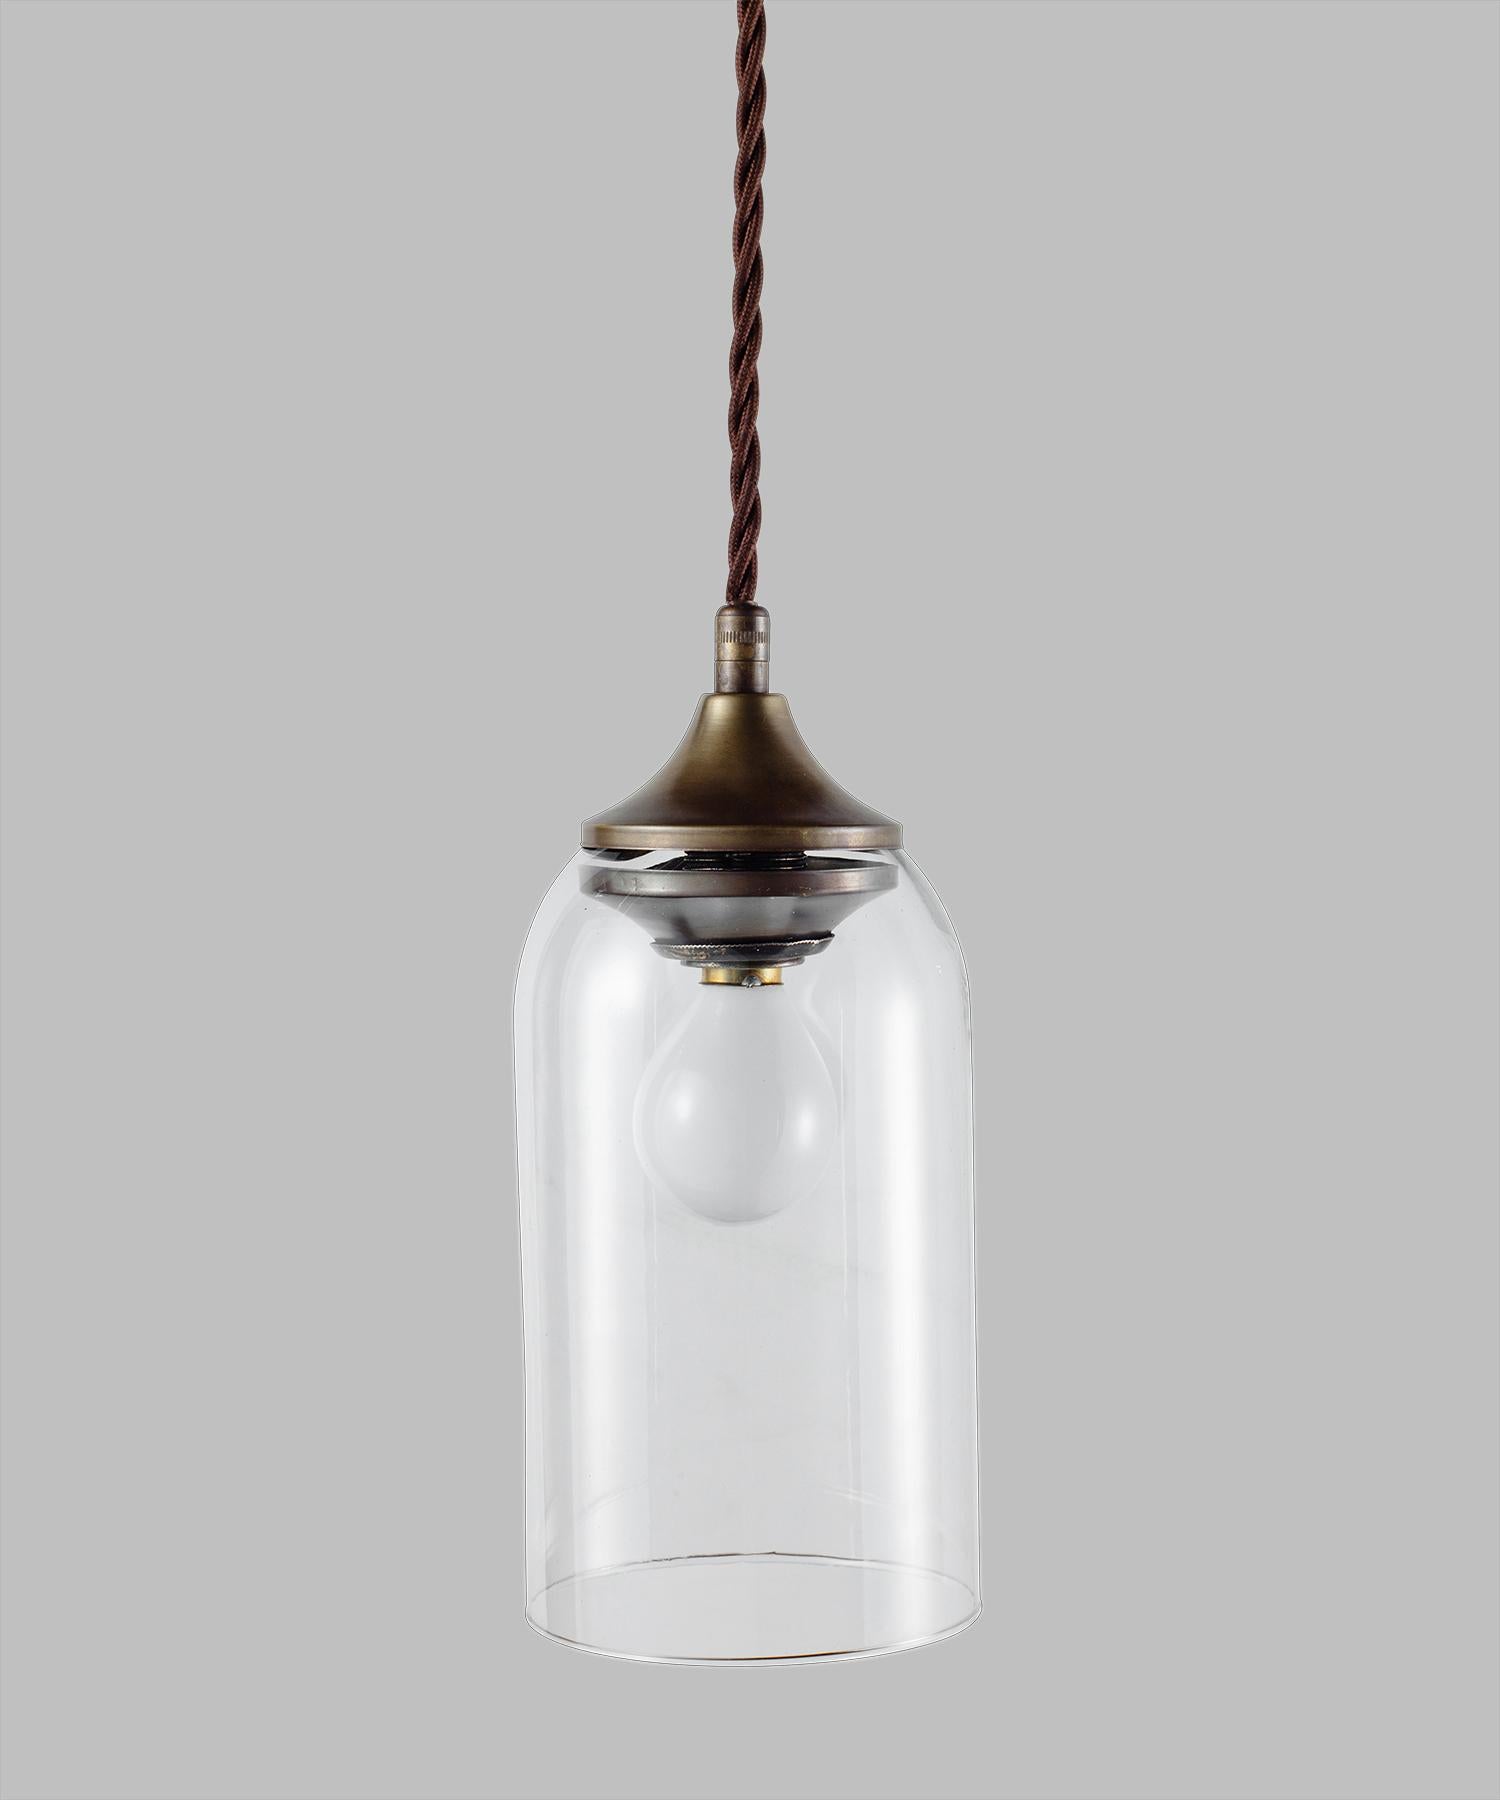 Modern Petite Bell Glass Pendant, Italy, 21st century